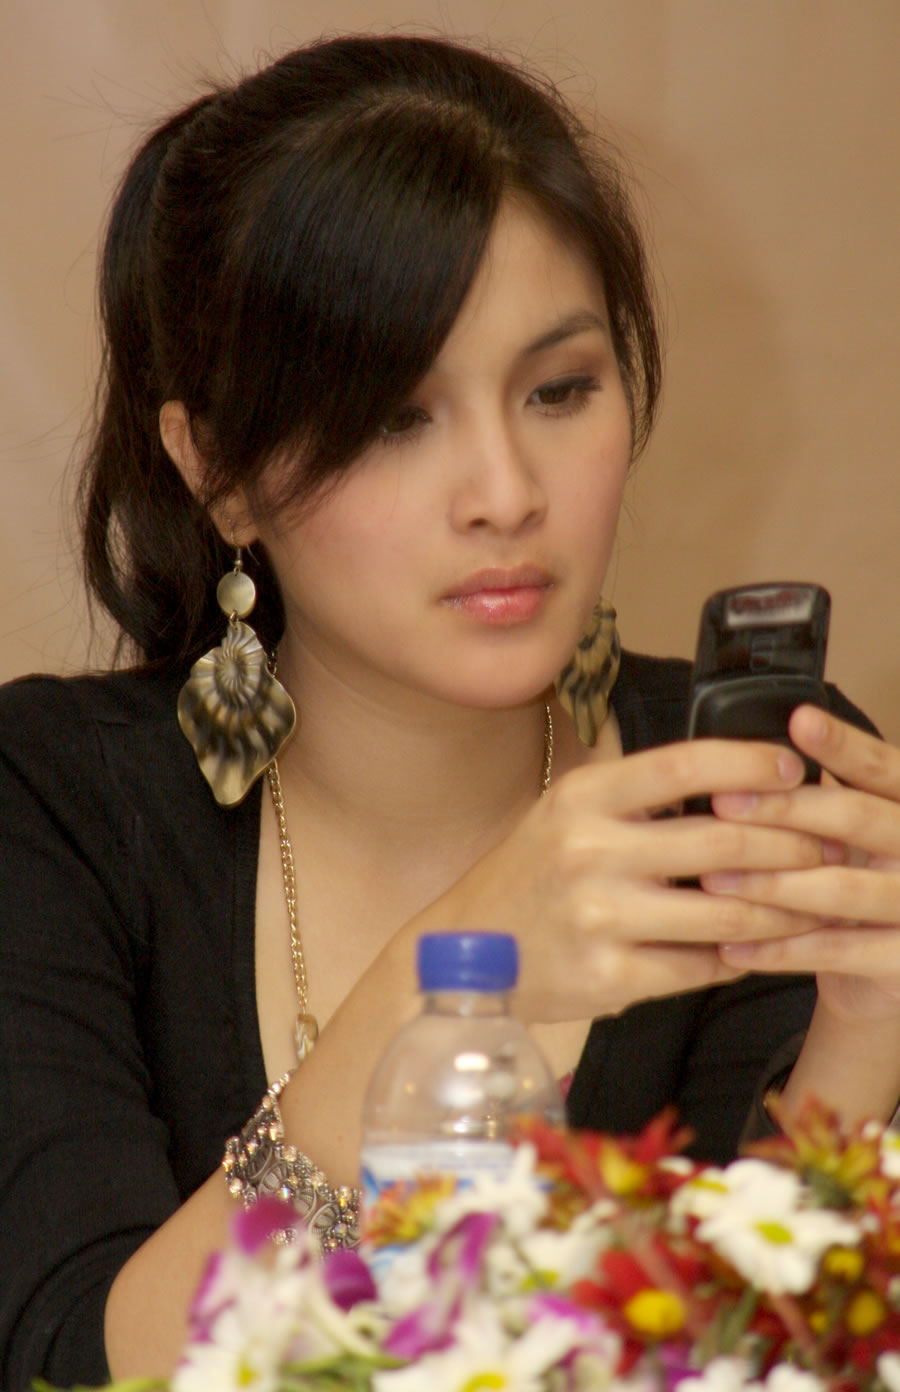 Profil Artis Cantik Sandra Dewi Dengan Foto Seksinya Seostarmoon